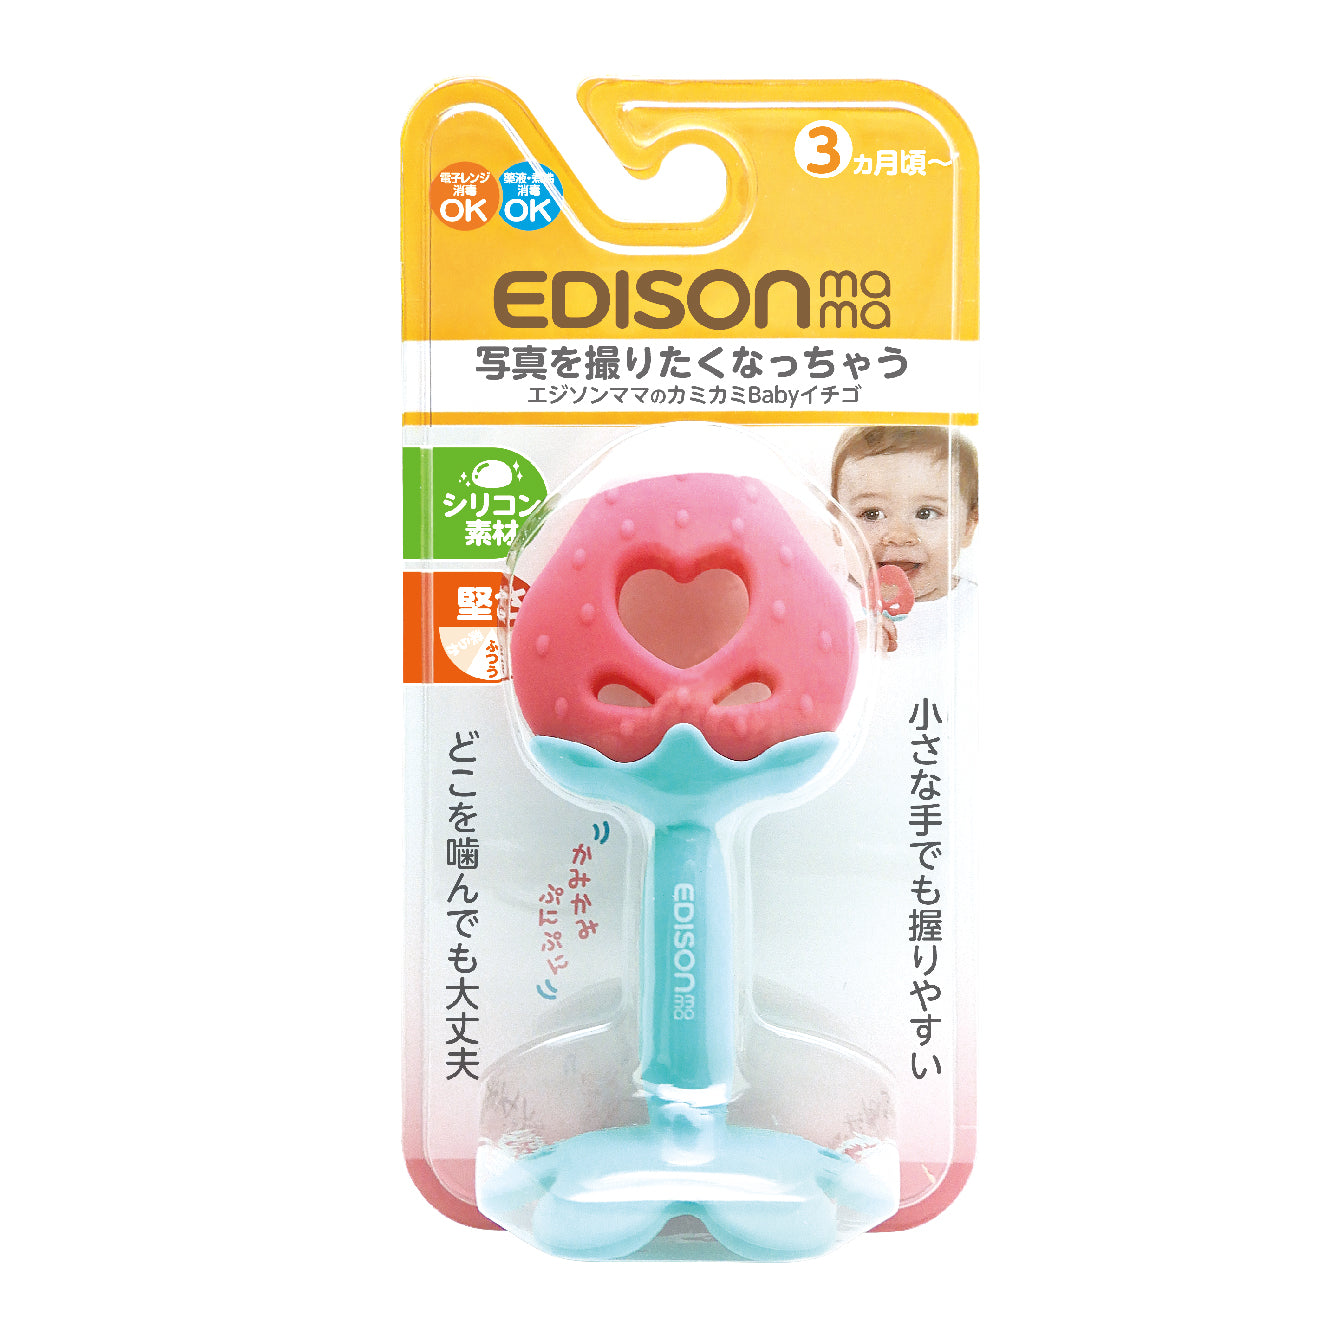 Edison Mama Baby Teether-Strawberry/Edison Mama小草莓牙咬胶 3 month+